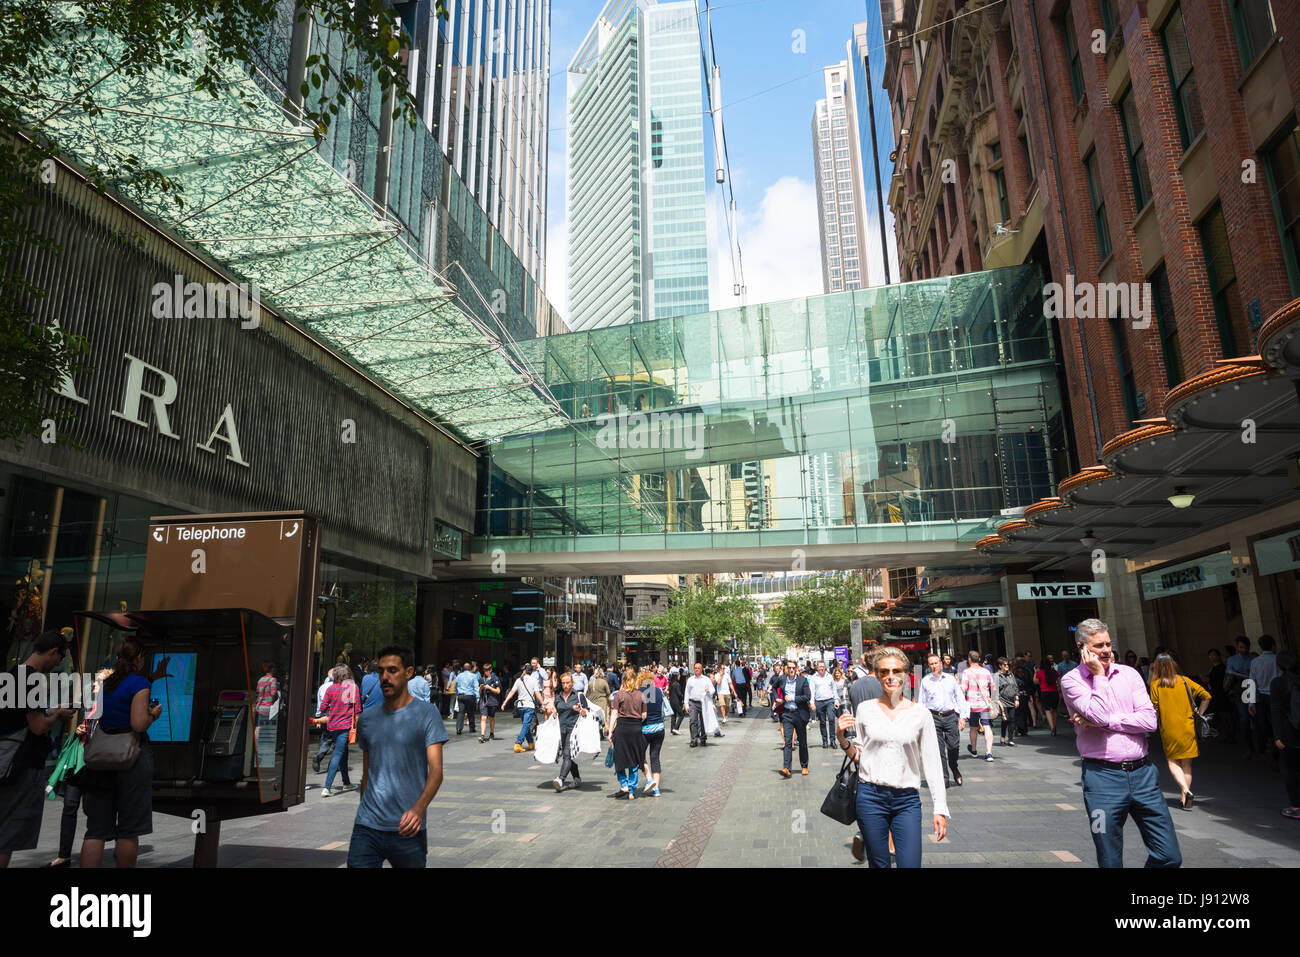 Strada pedonale dello shopping Pitt Street Mall, Sydney, Australia. Foto Stock